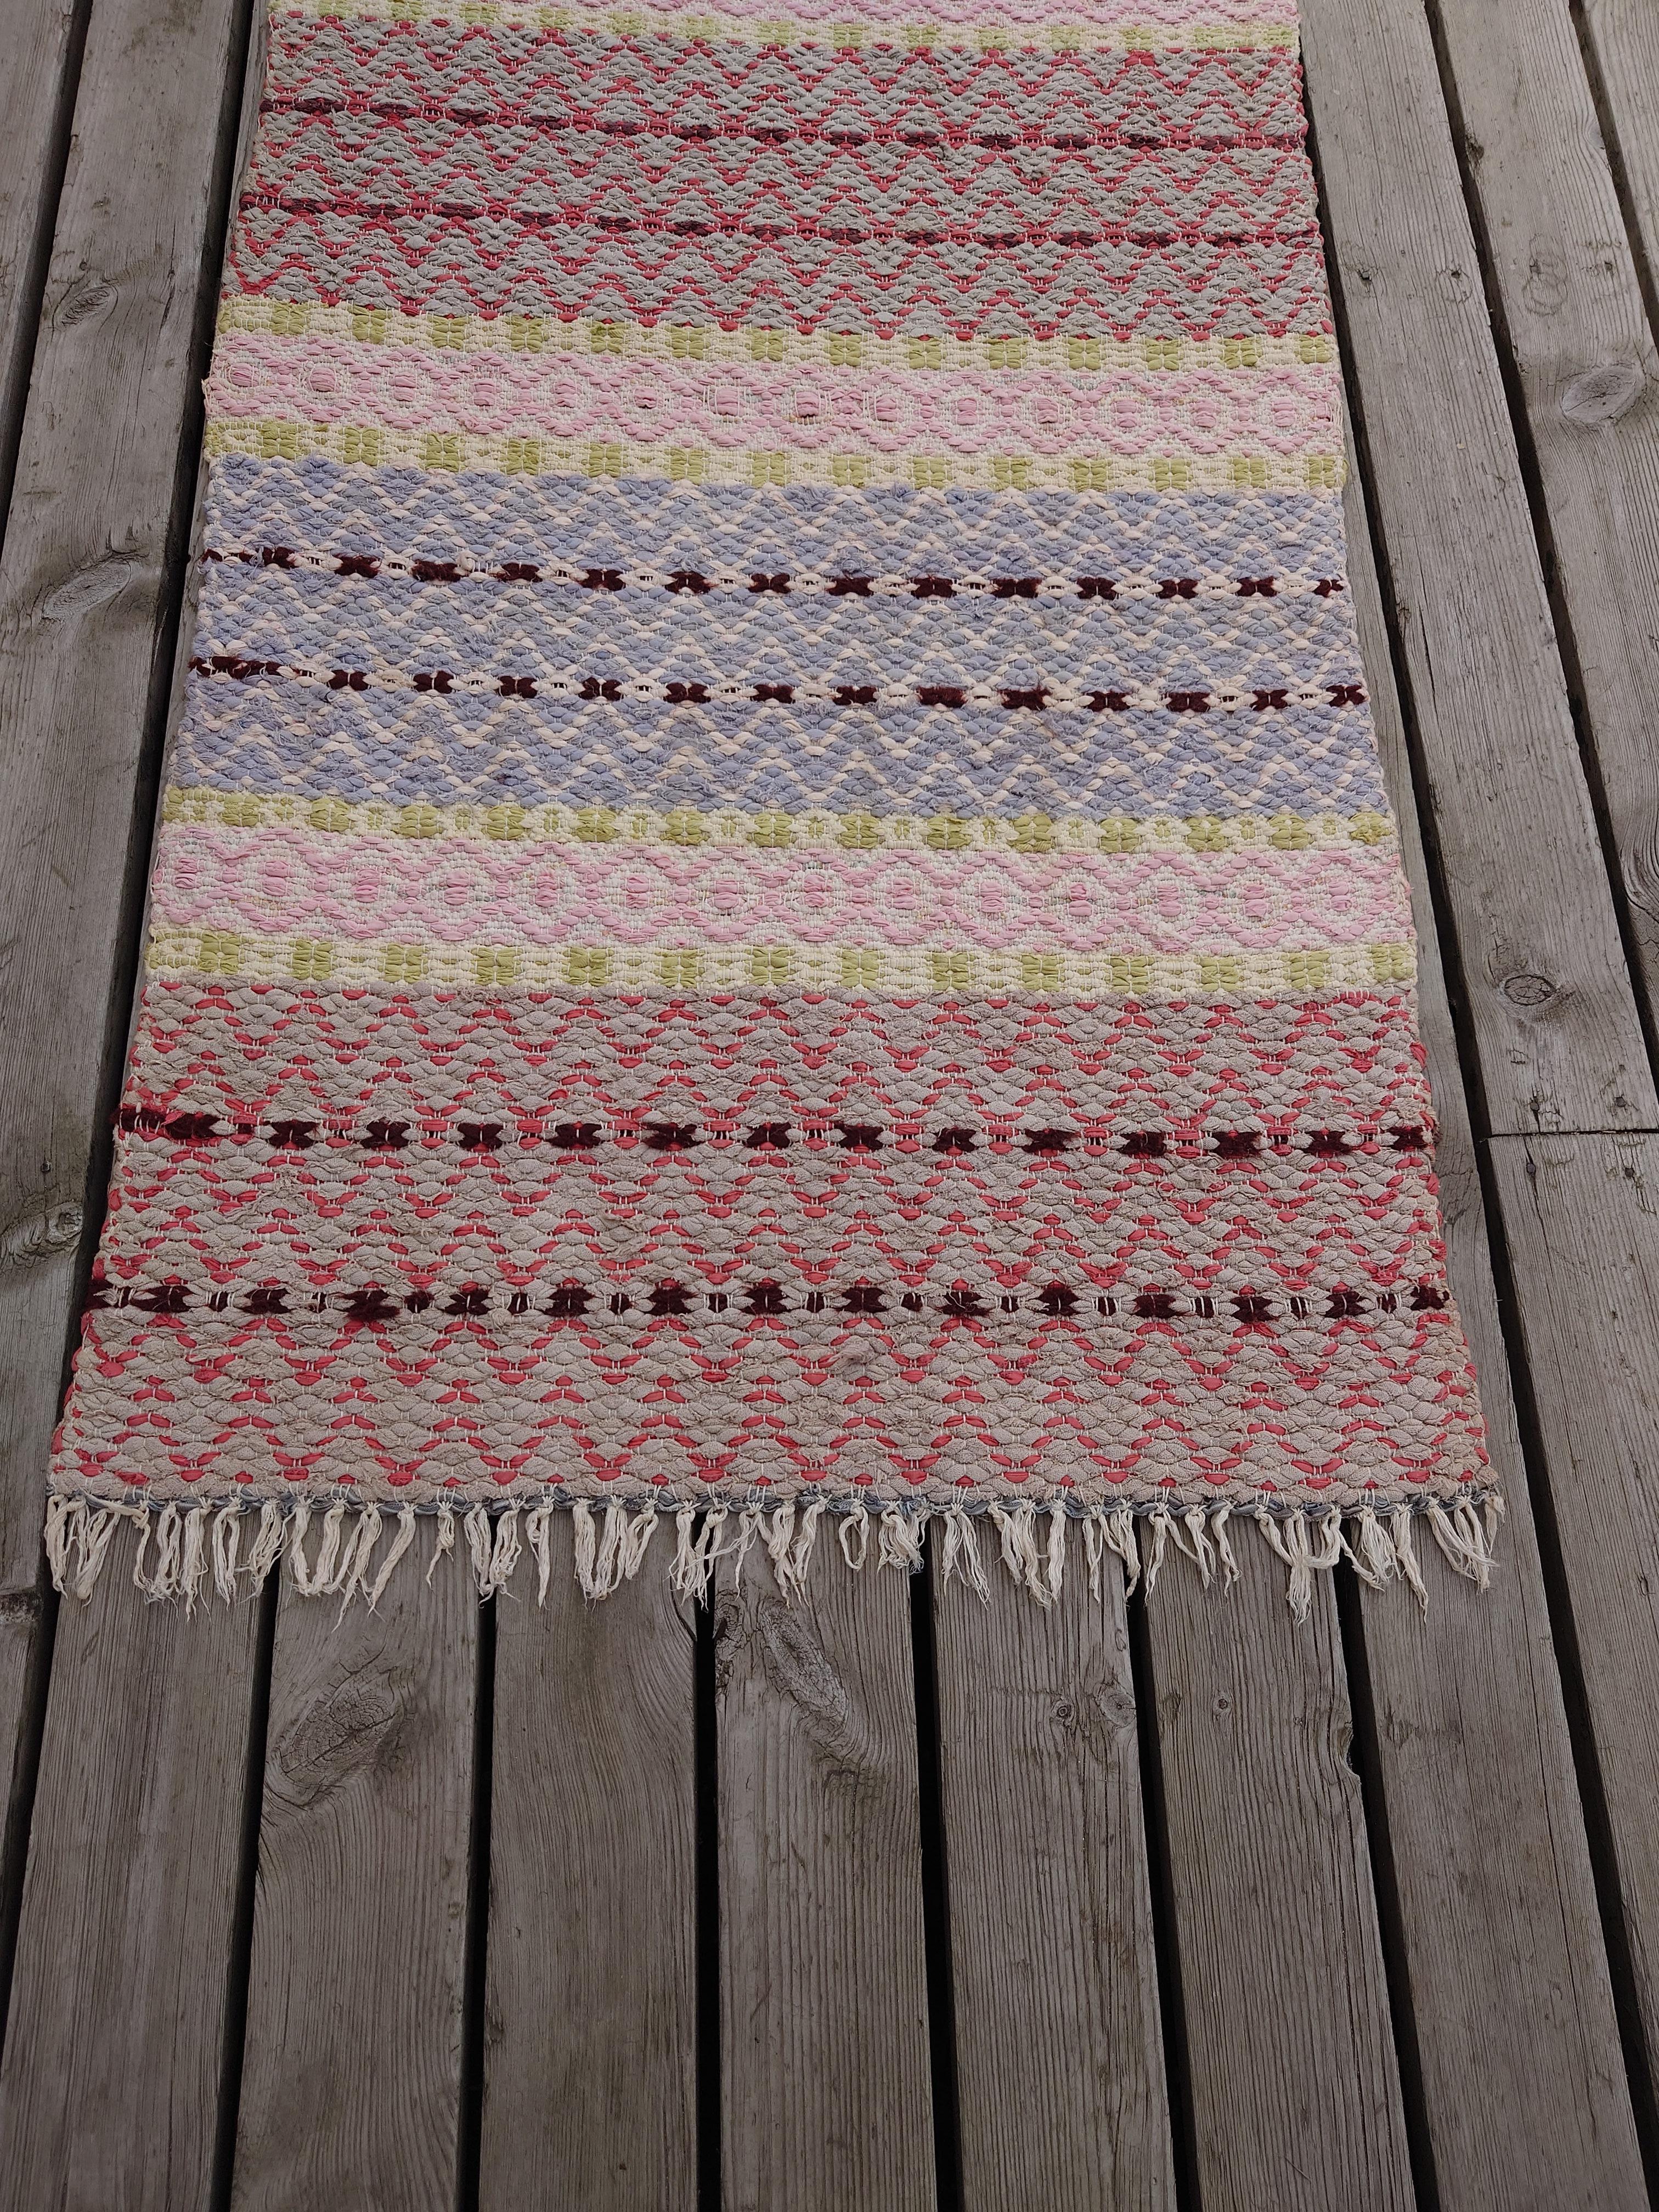 swedish rag rugs